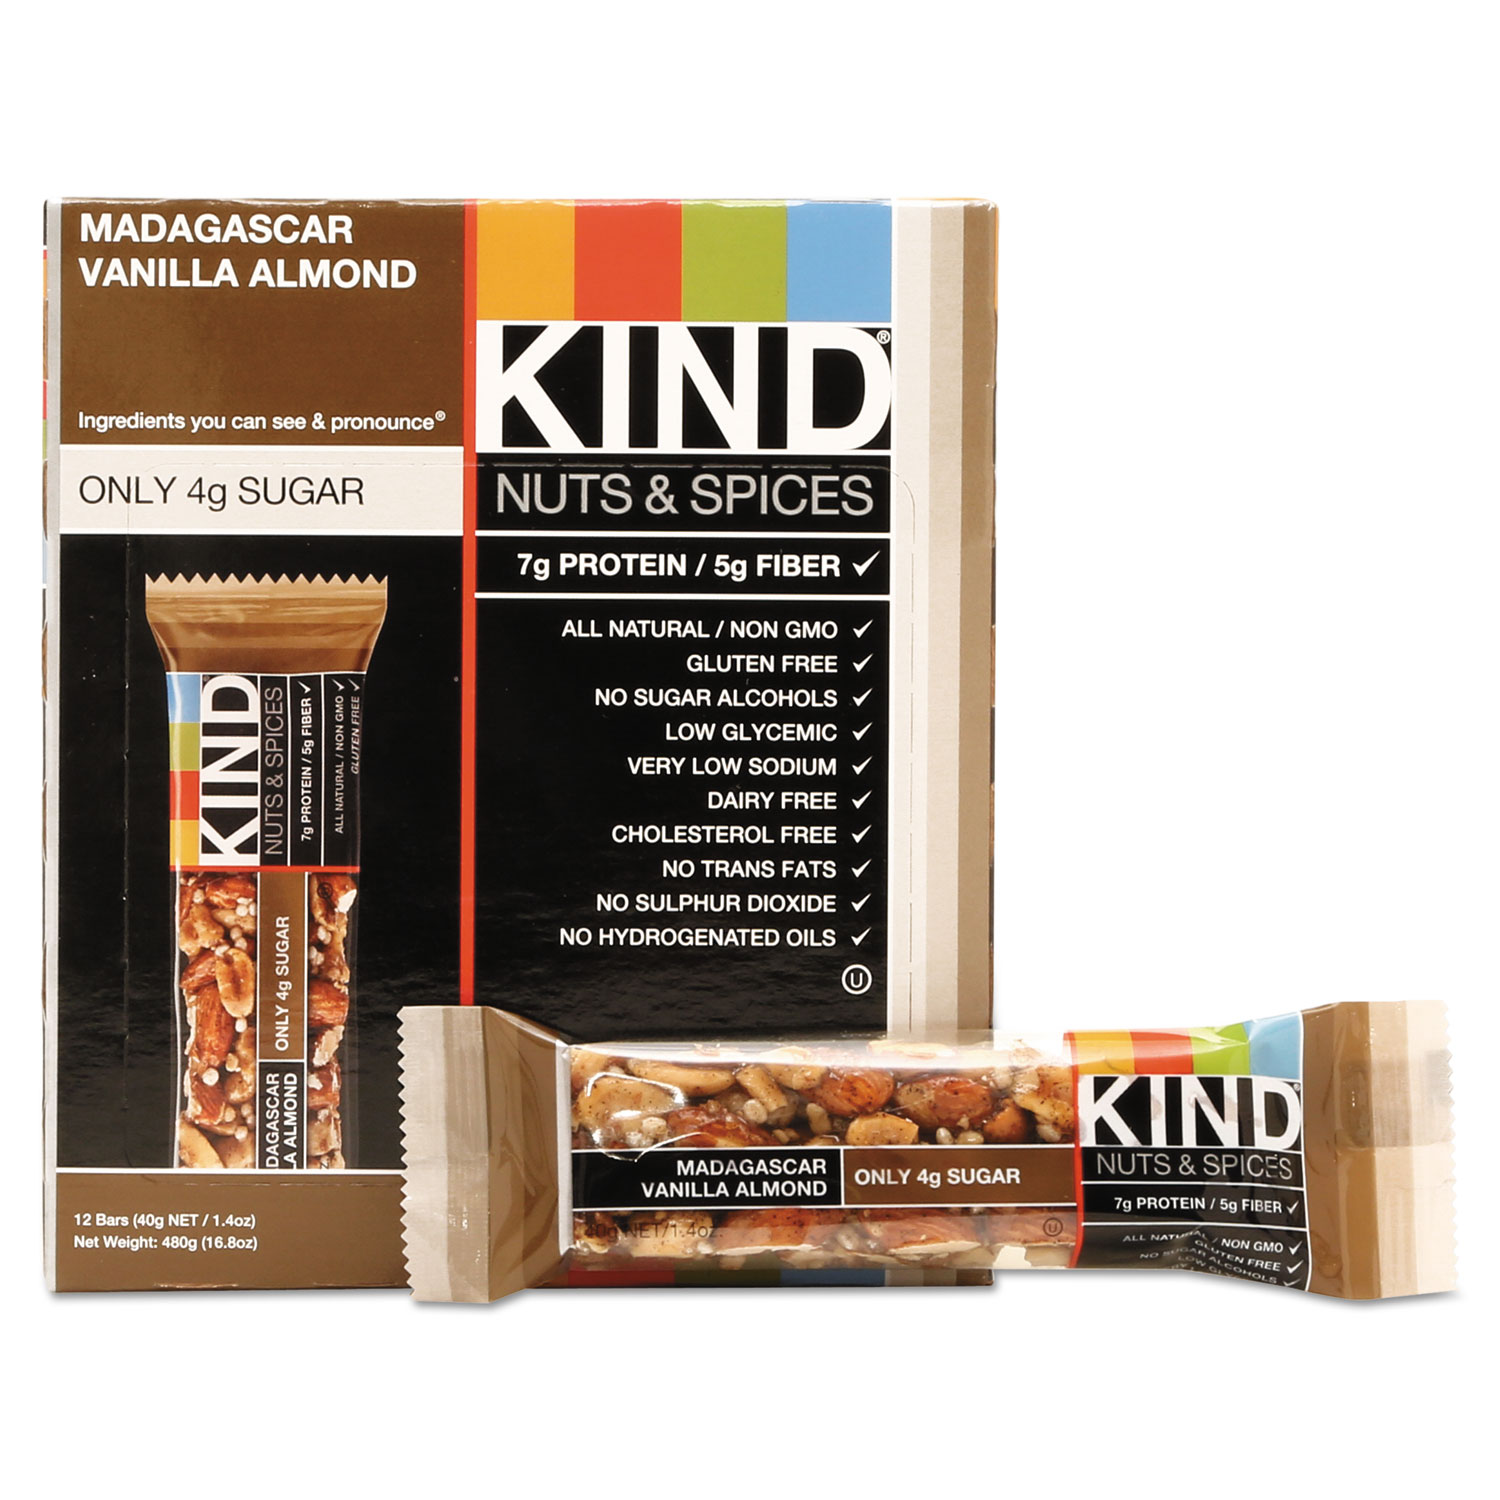  KIND 17850 Nuts and Spices Bar, Madagascar Vanilla Almond, 1.4 oz, 12/Box (KND17850) 